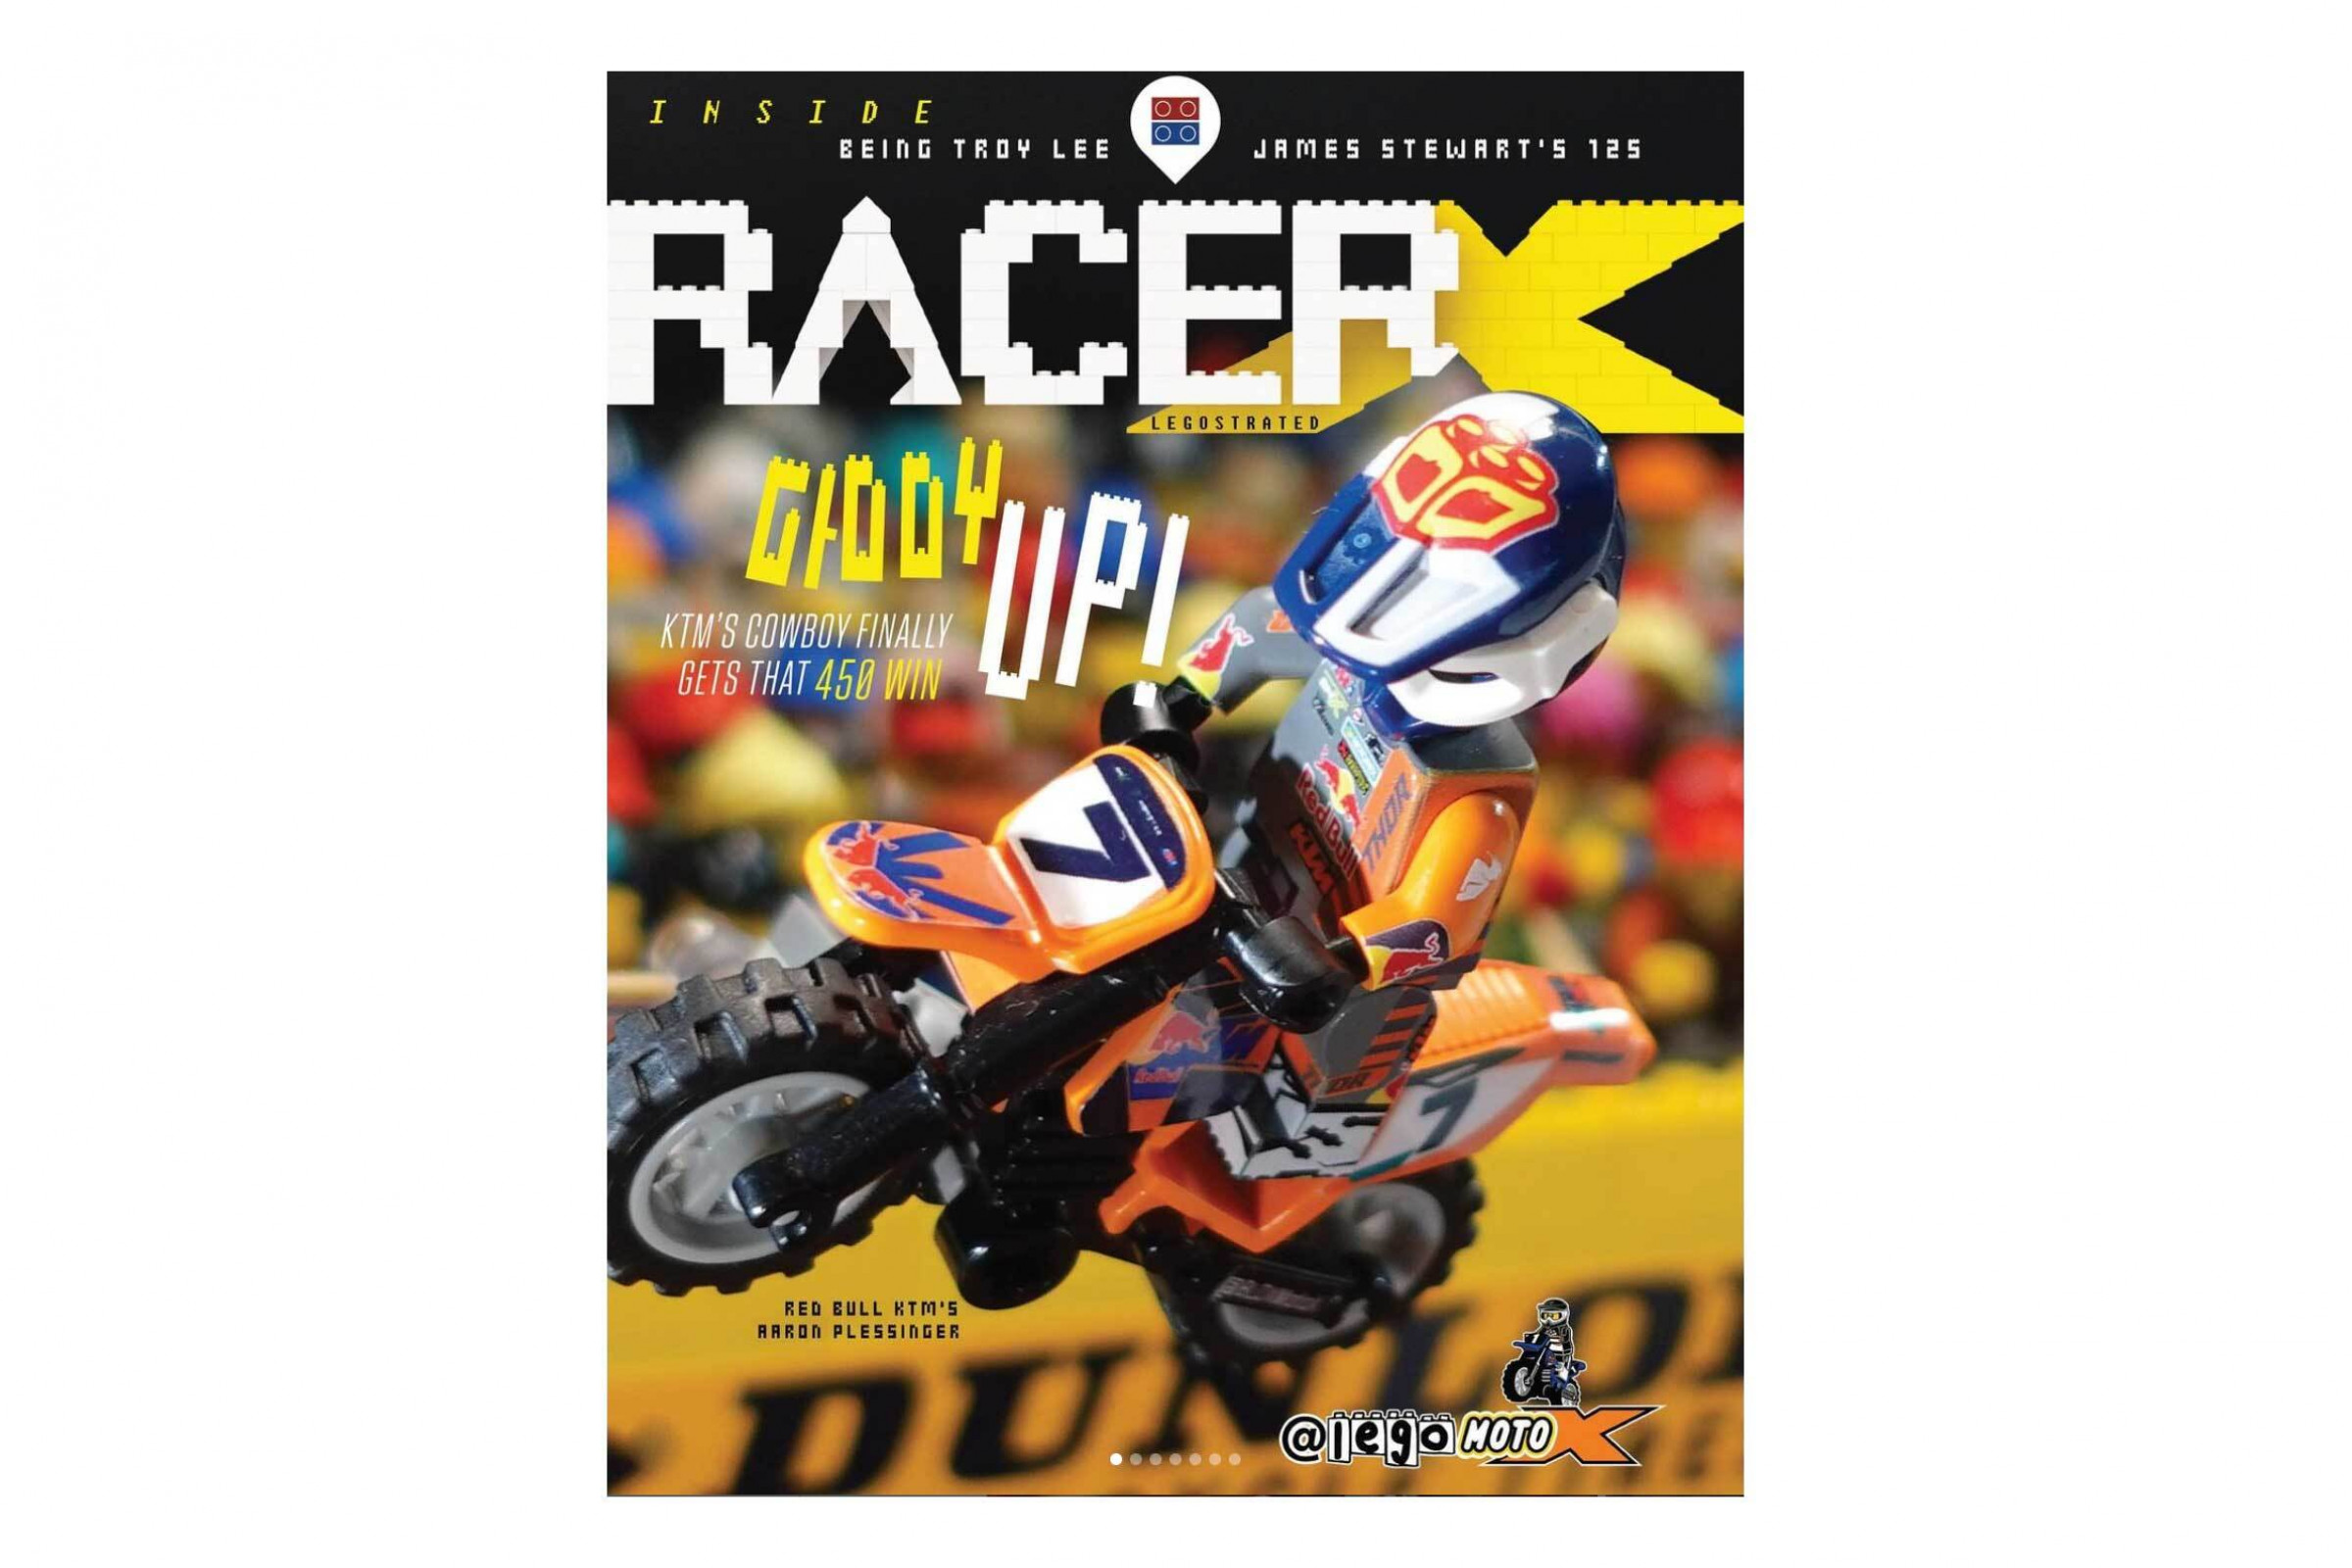 Racerhead #7 - Racer X